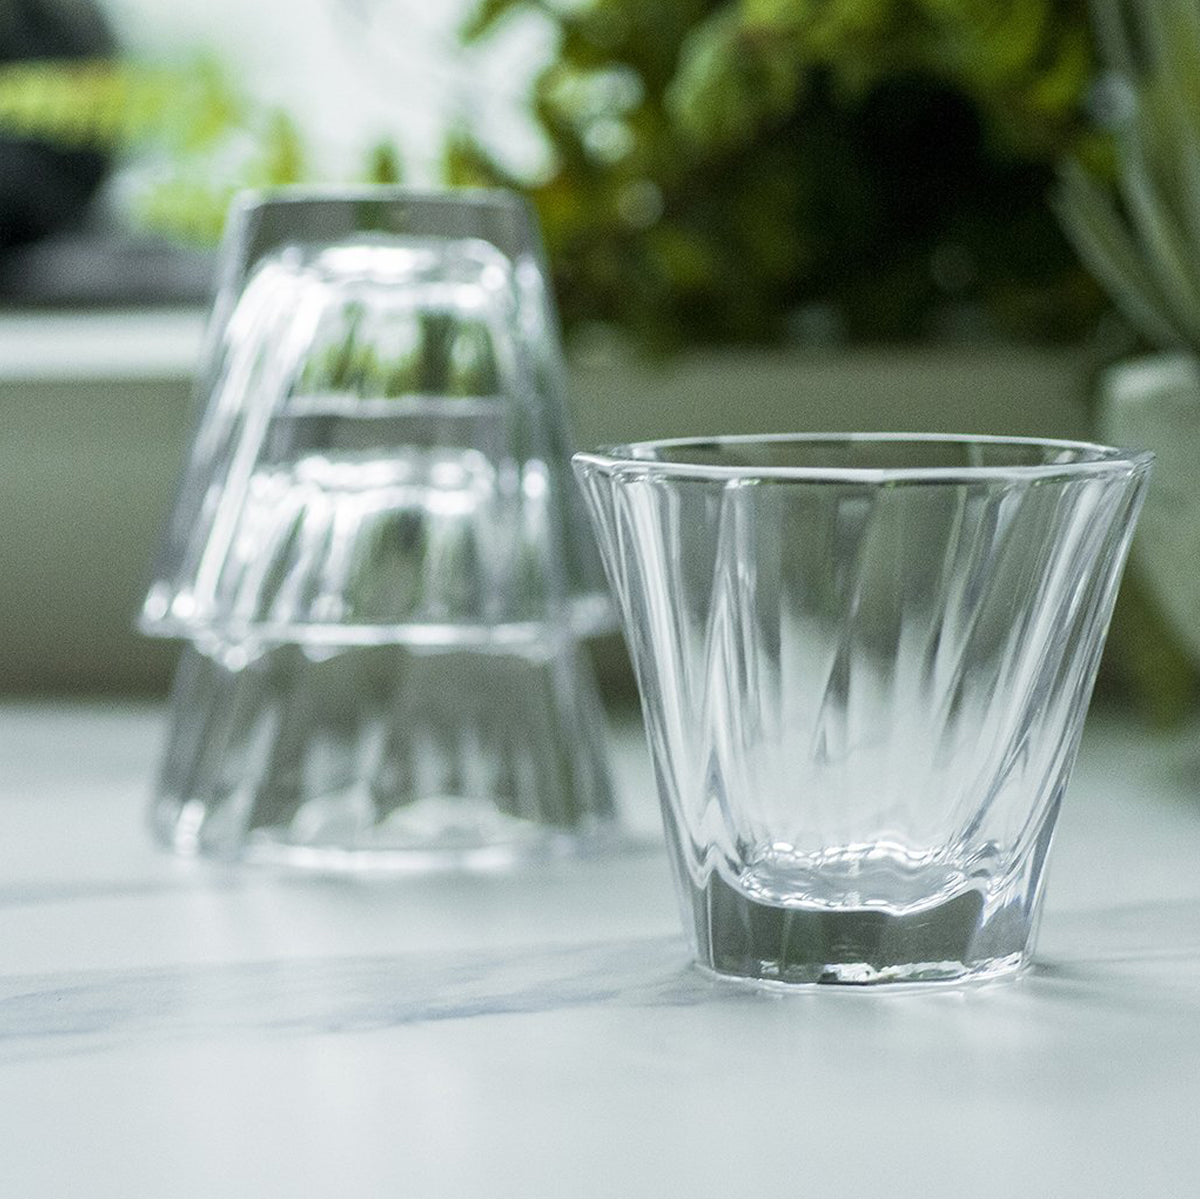 Vaso Loveramics Twisted Cortado 120ml glass vidrio (clear - transparente)